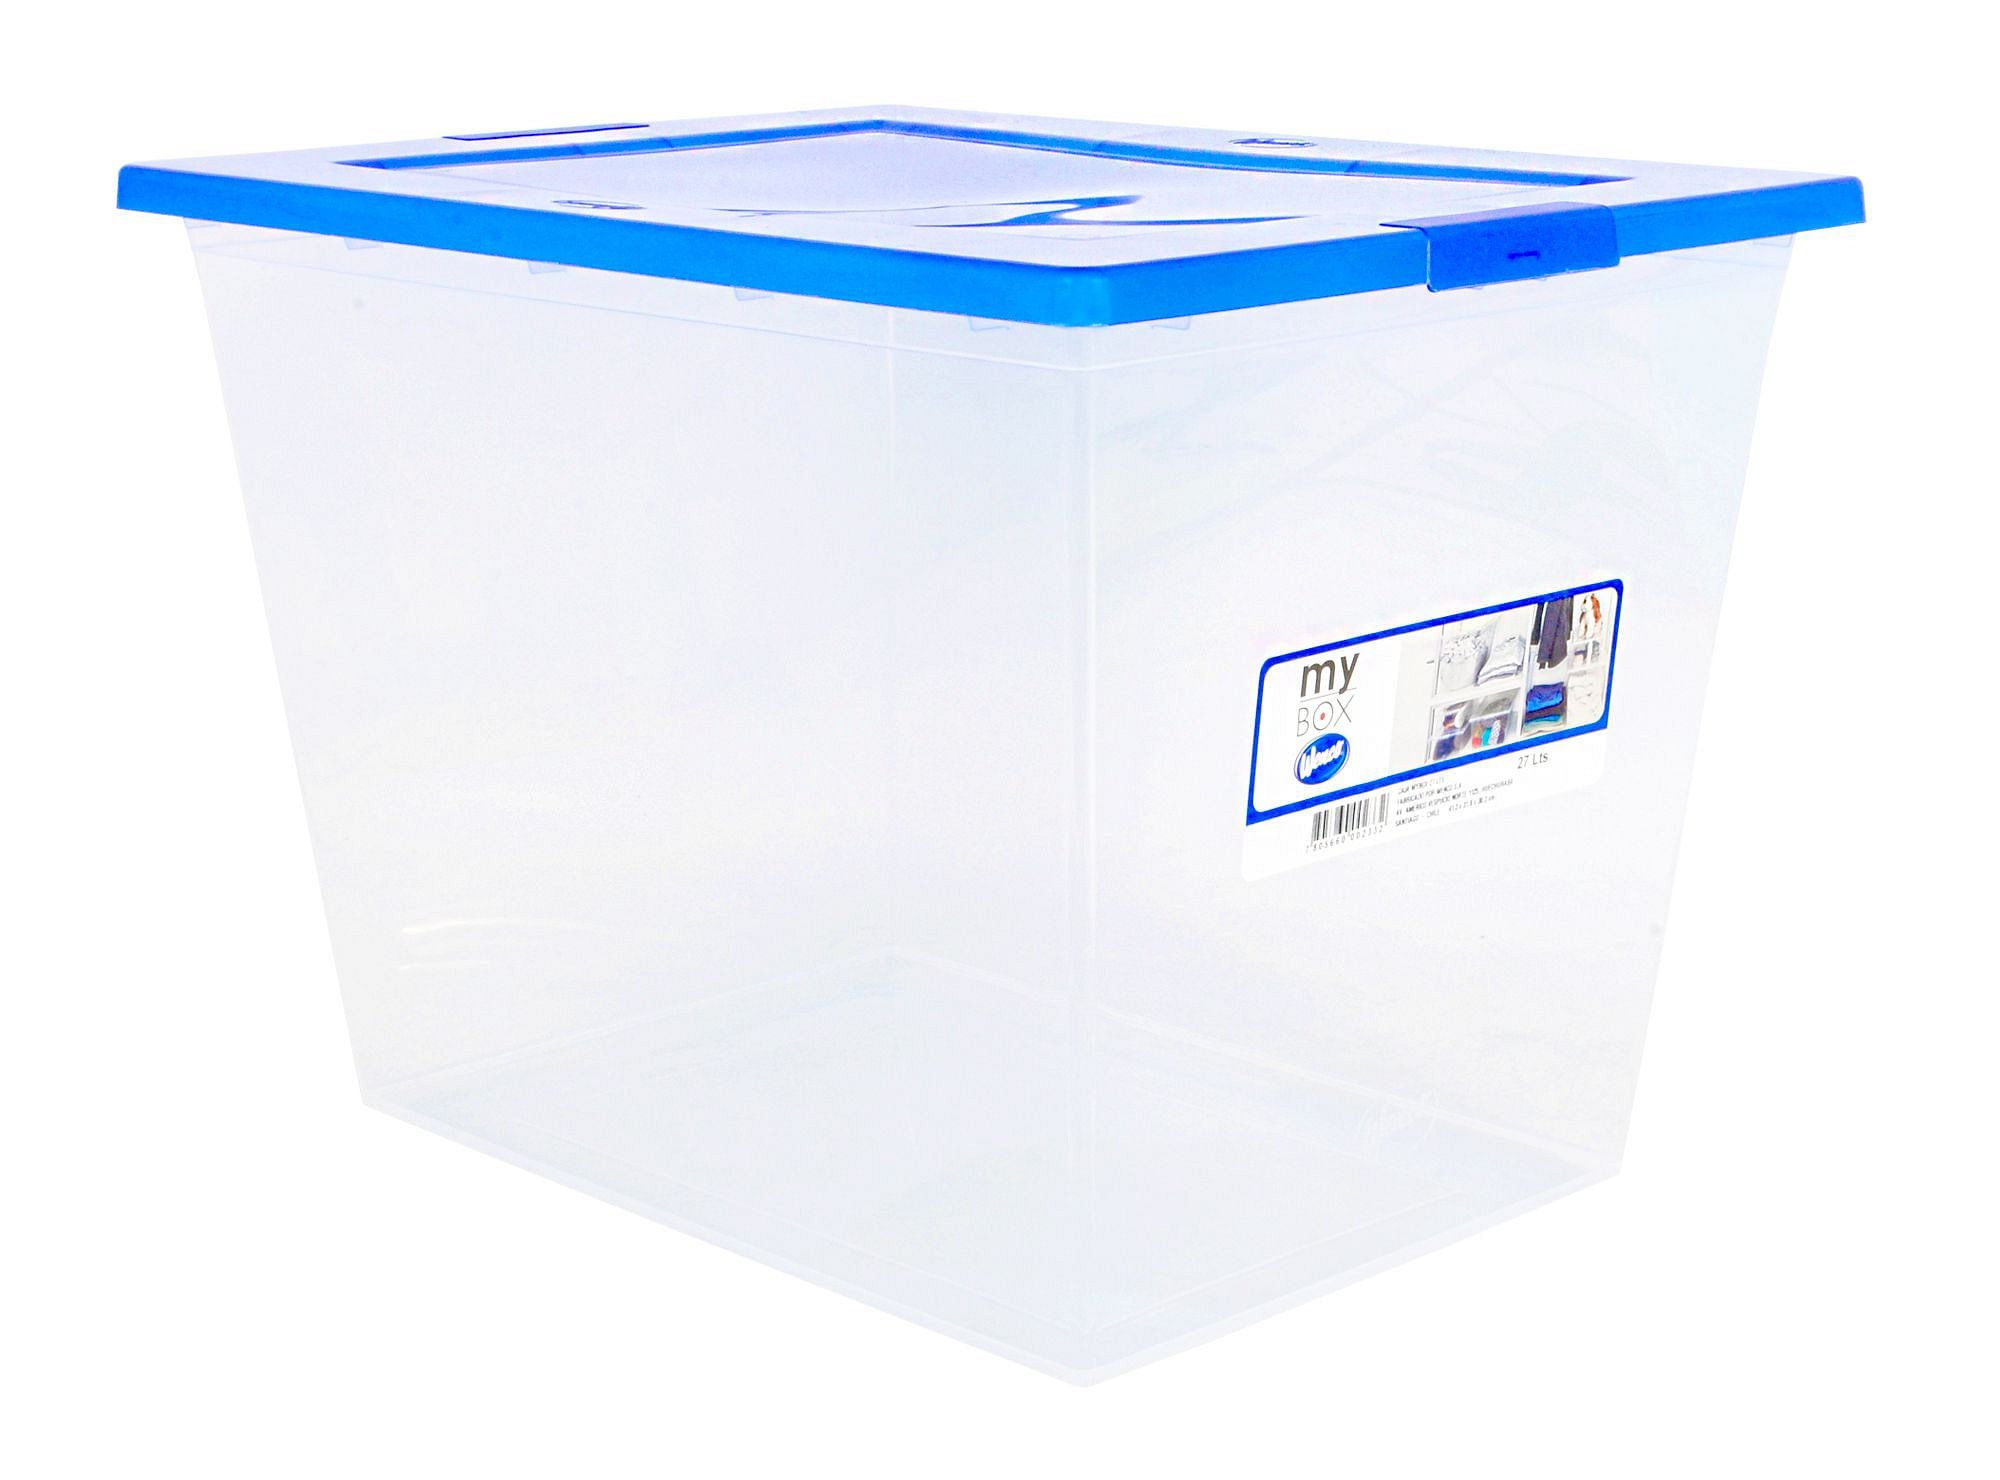 Caja organizadora 10 litros 38x26x13 cm azul